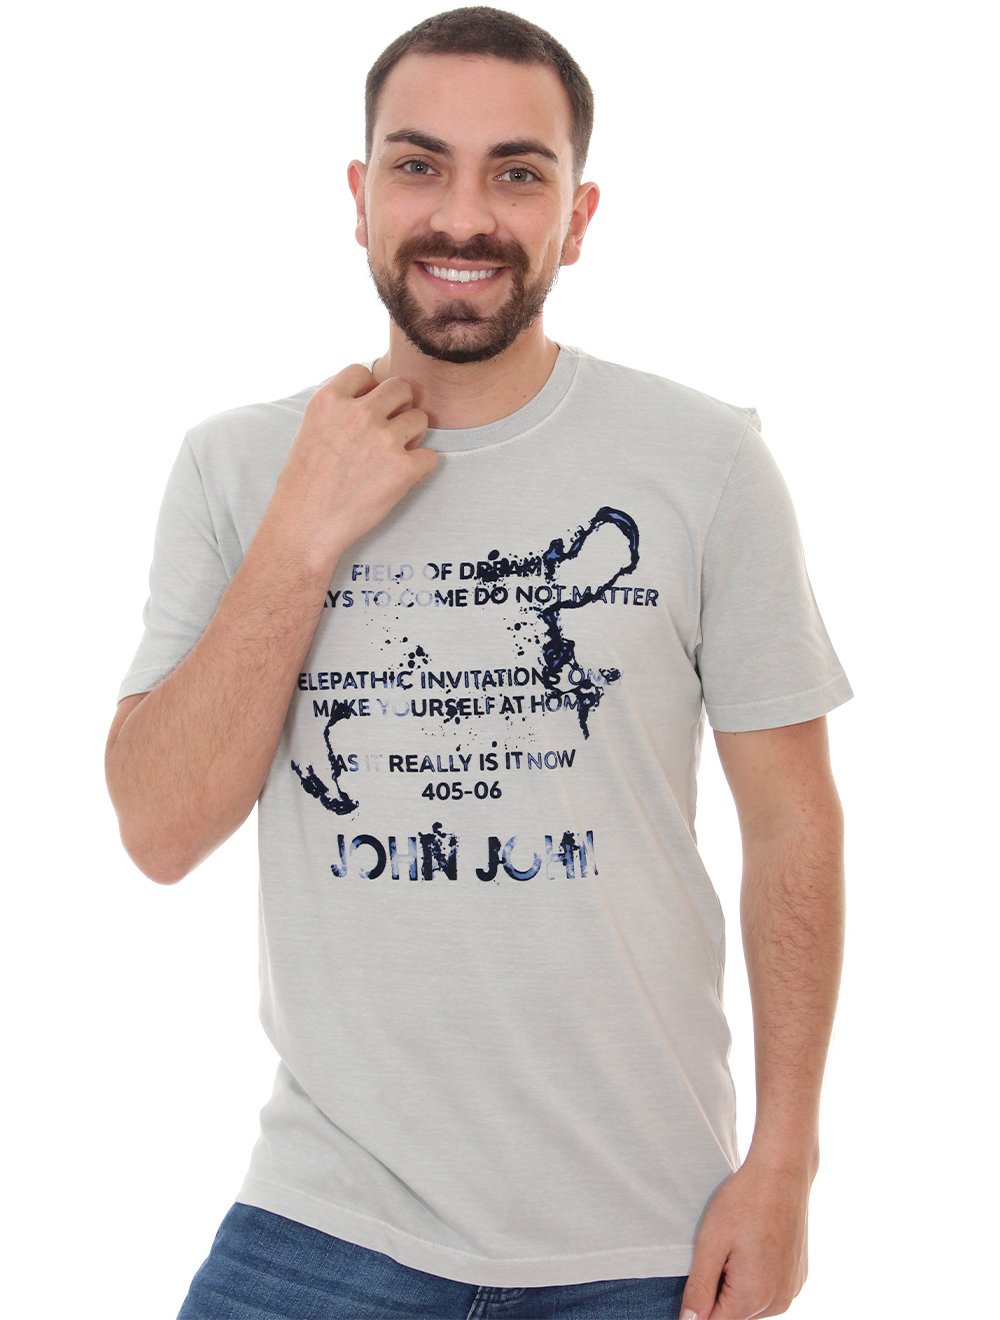 Camiseta John John Masculina Regular Melt Your Mind Branca - GLAMI